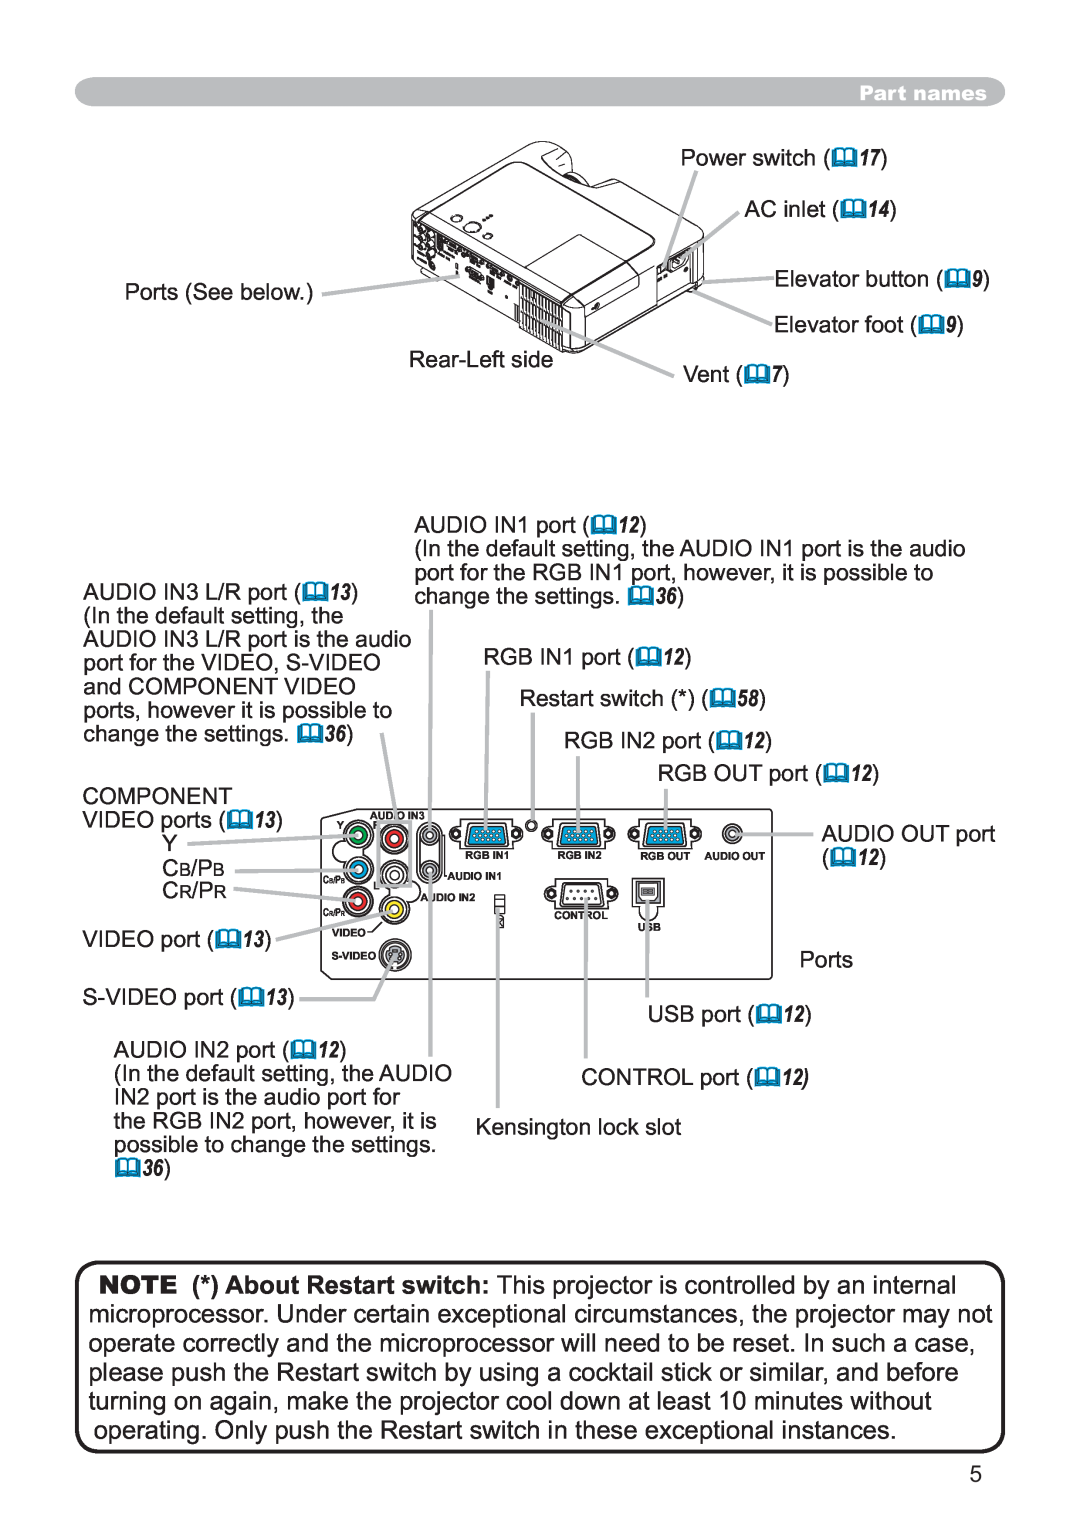 Hitachi CP-X251 user manual Component, VIDEO ports, Cb/Pb, Cr/Pr 